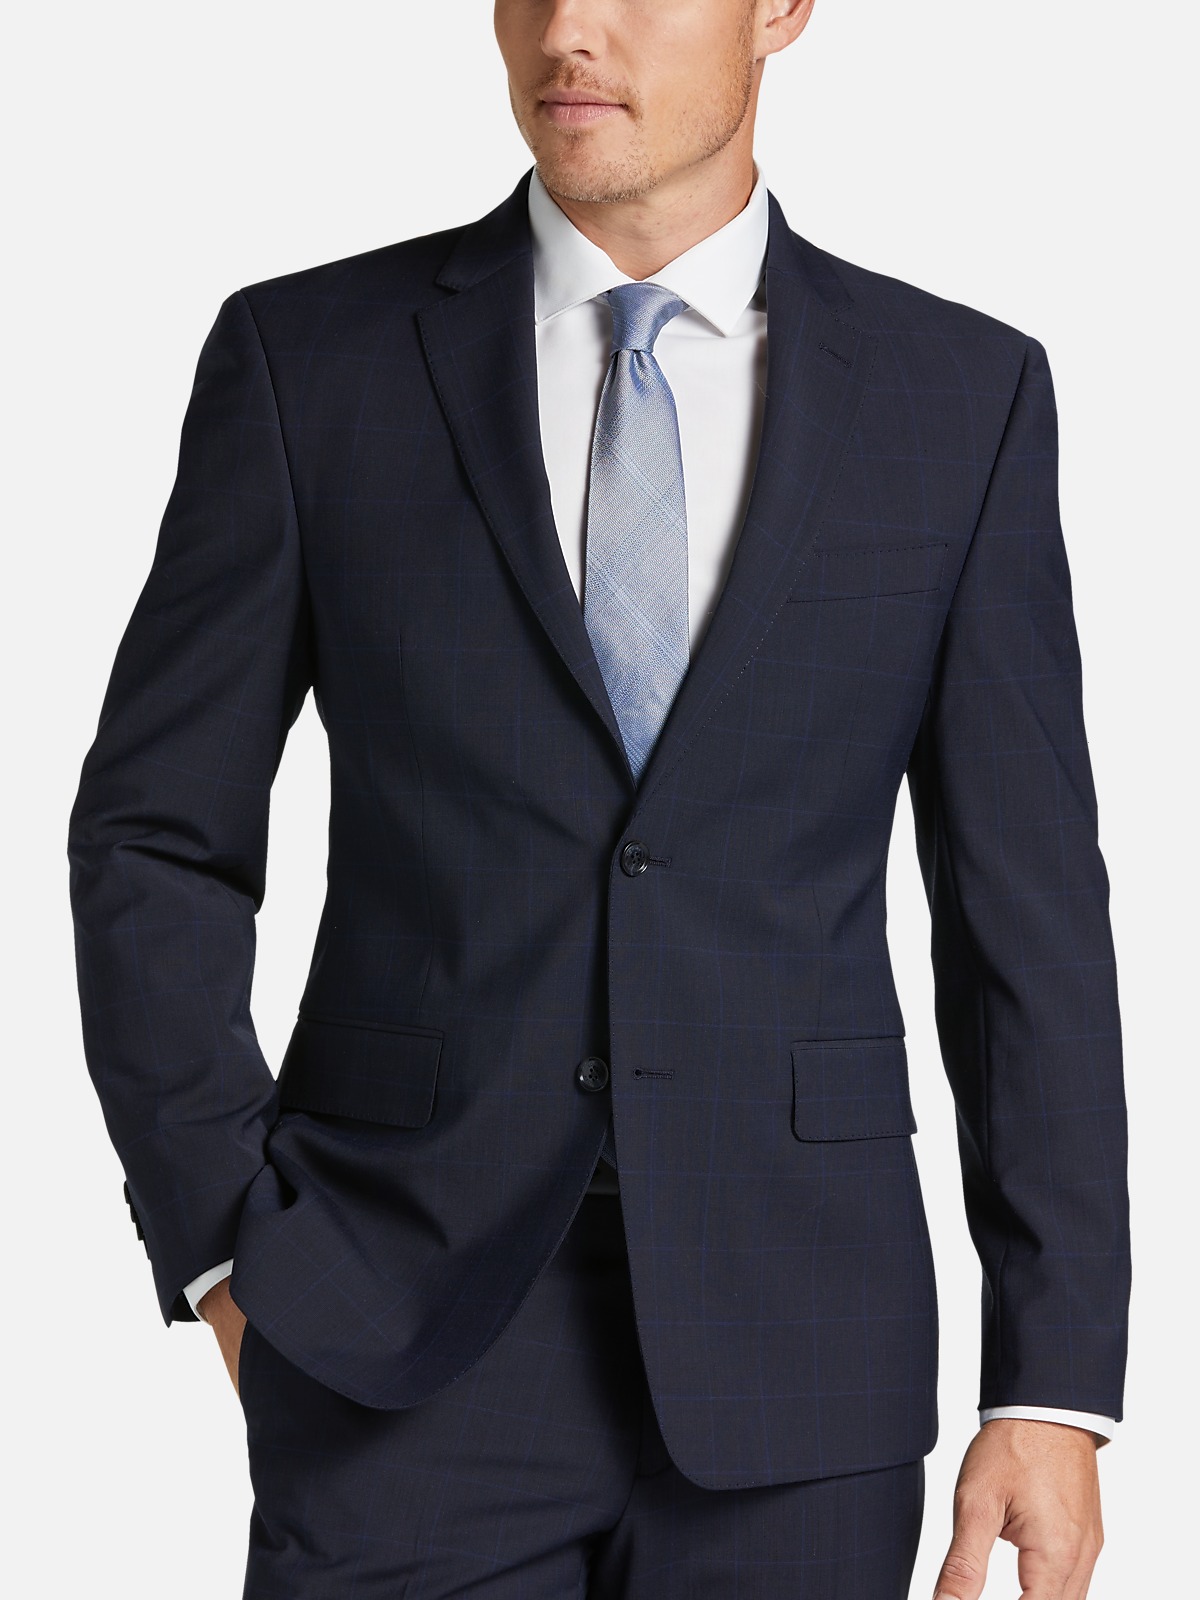 Hilfiger Men\'s Tommy | All Fit Wearhouse Sale| Modern Suit